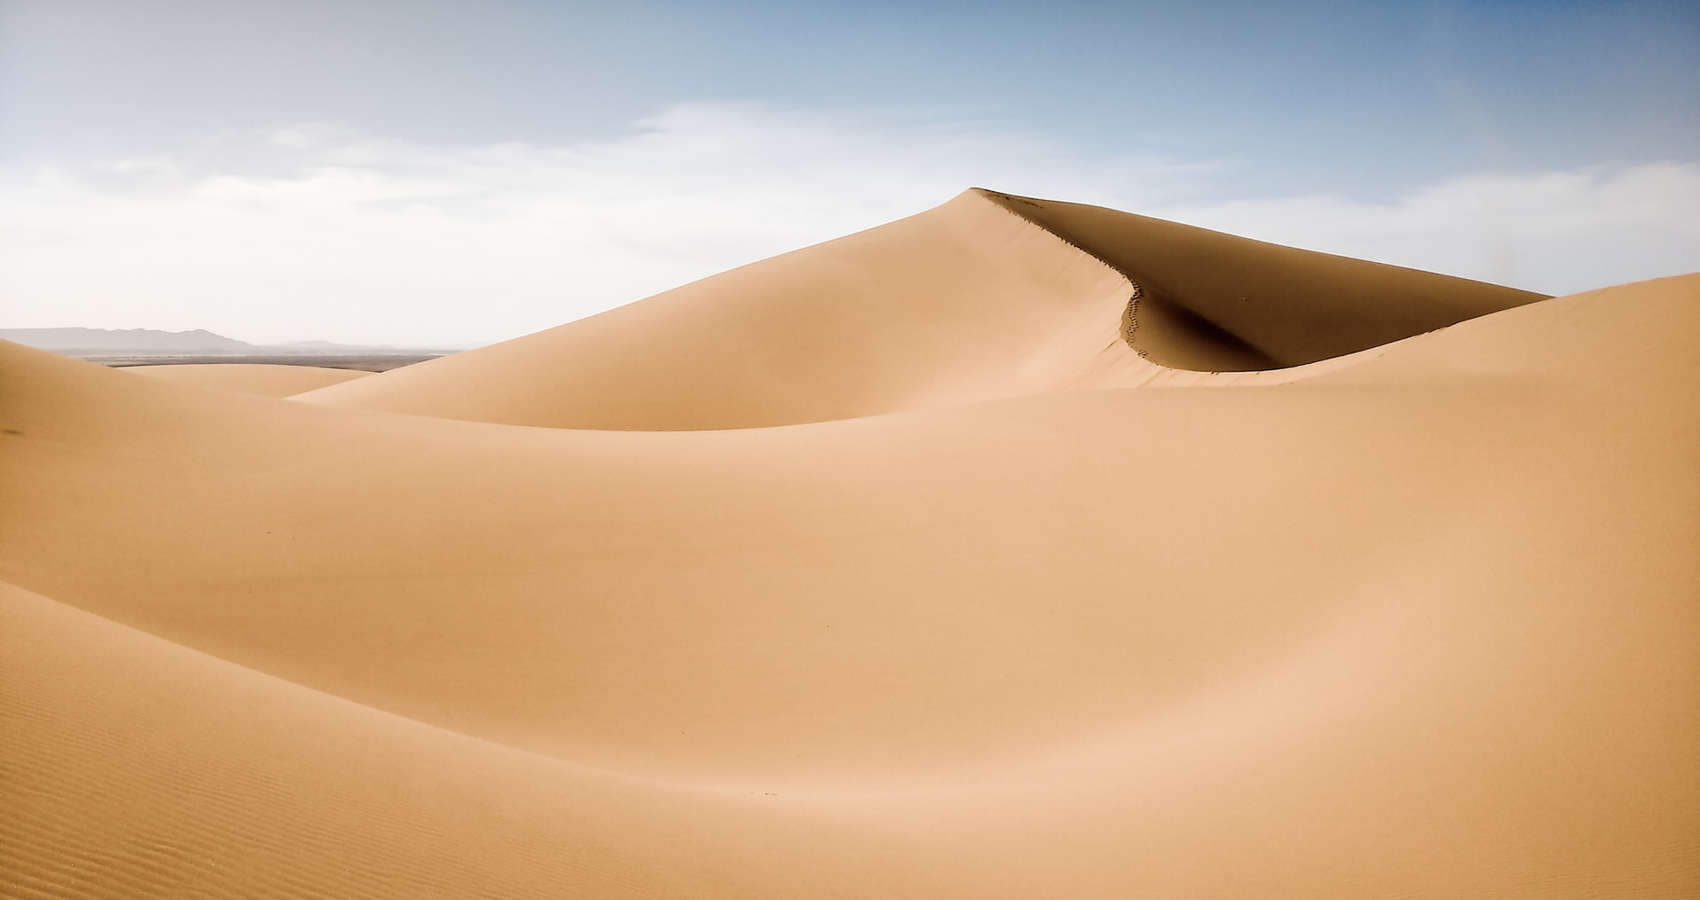 The Music of Arabian Dunes, poetry by Shamik Banerjee at Spilwords.com